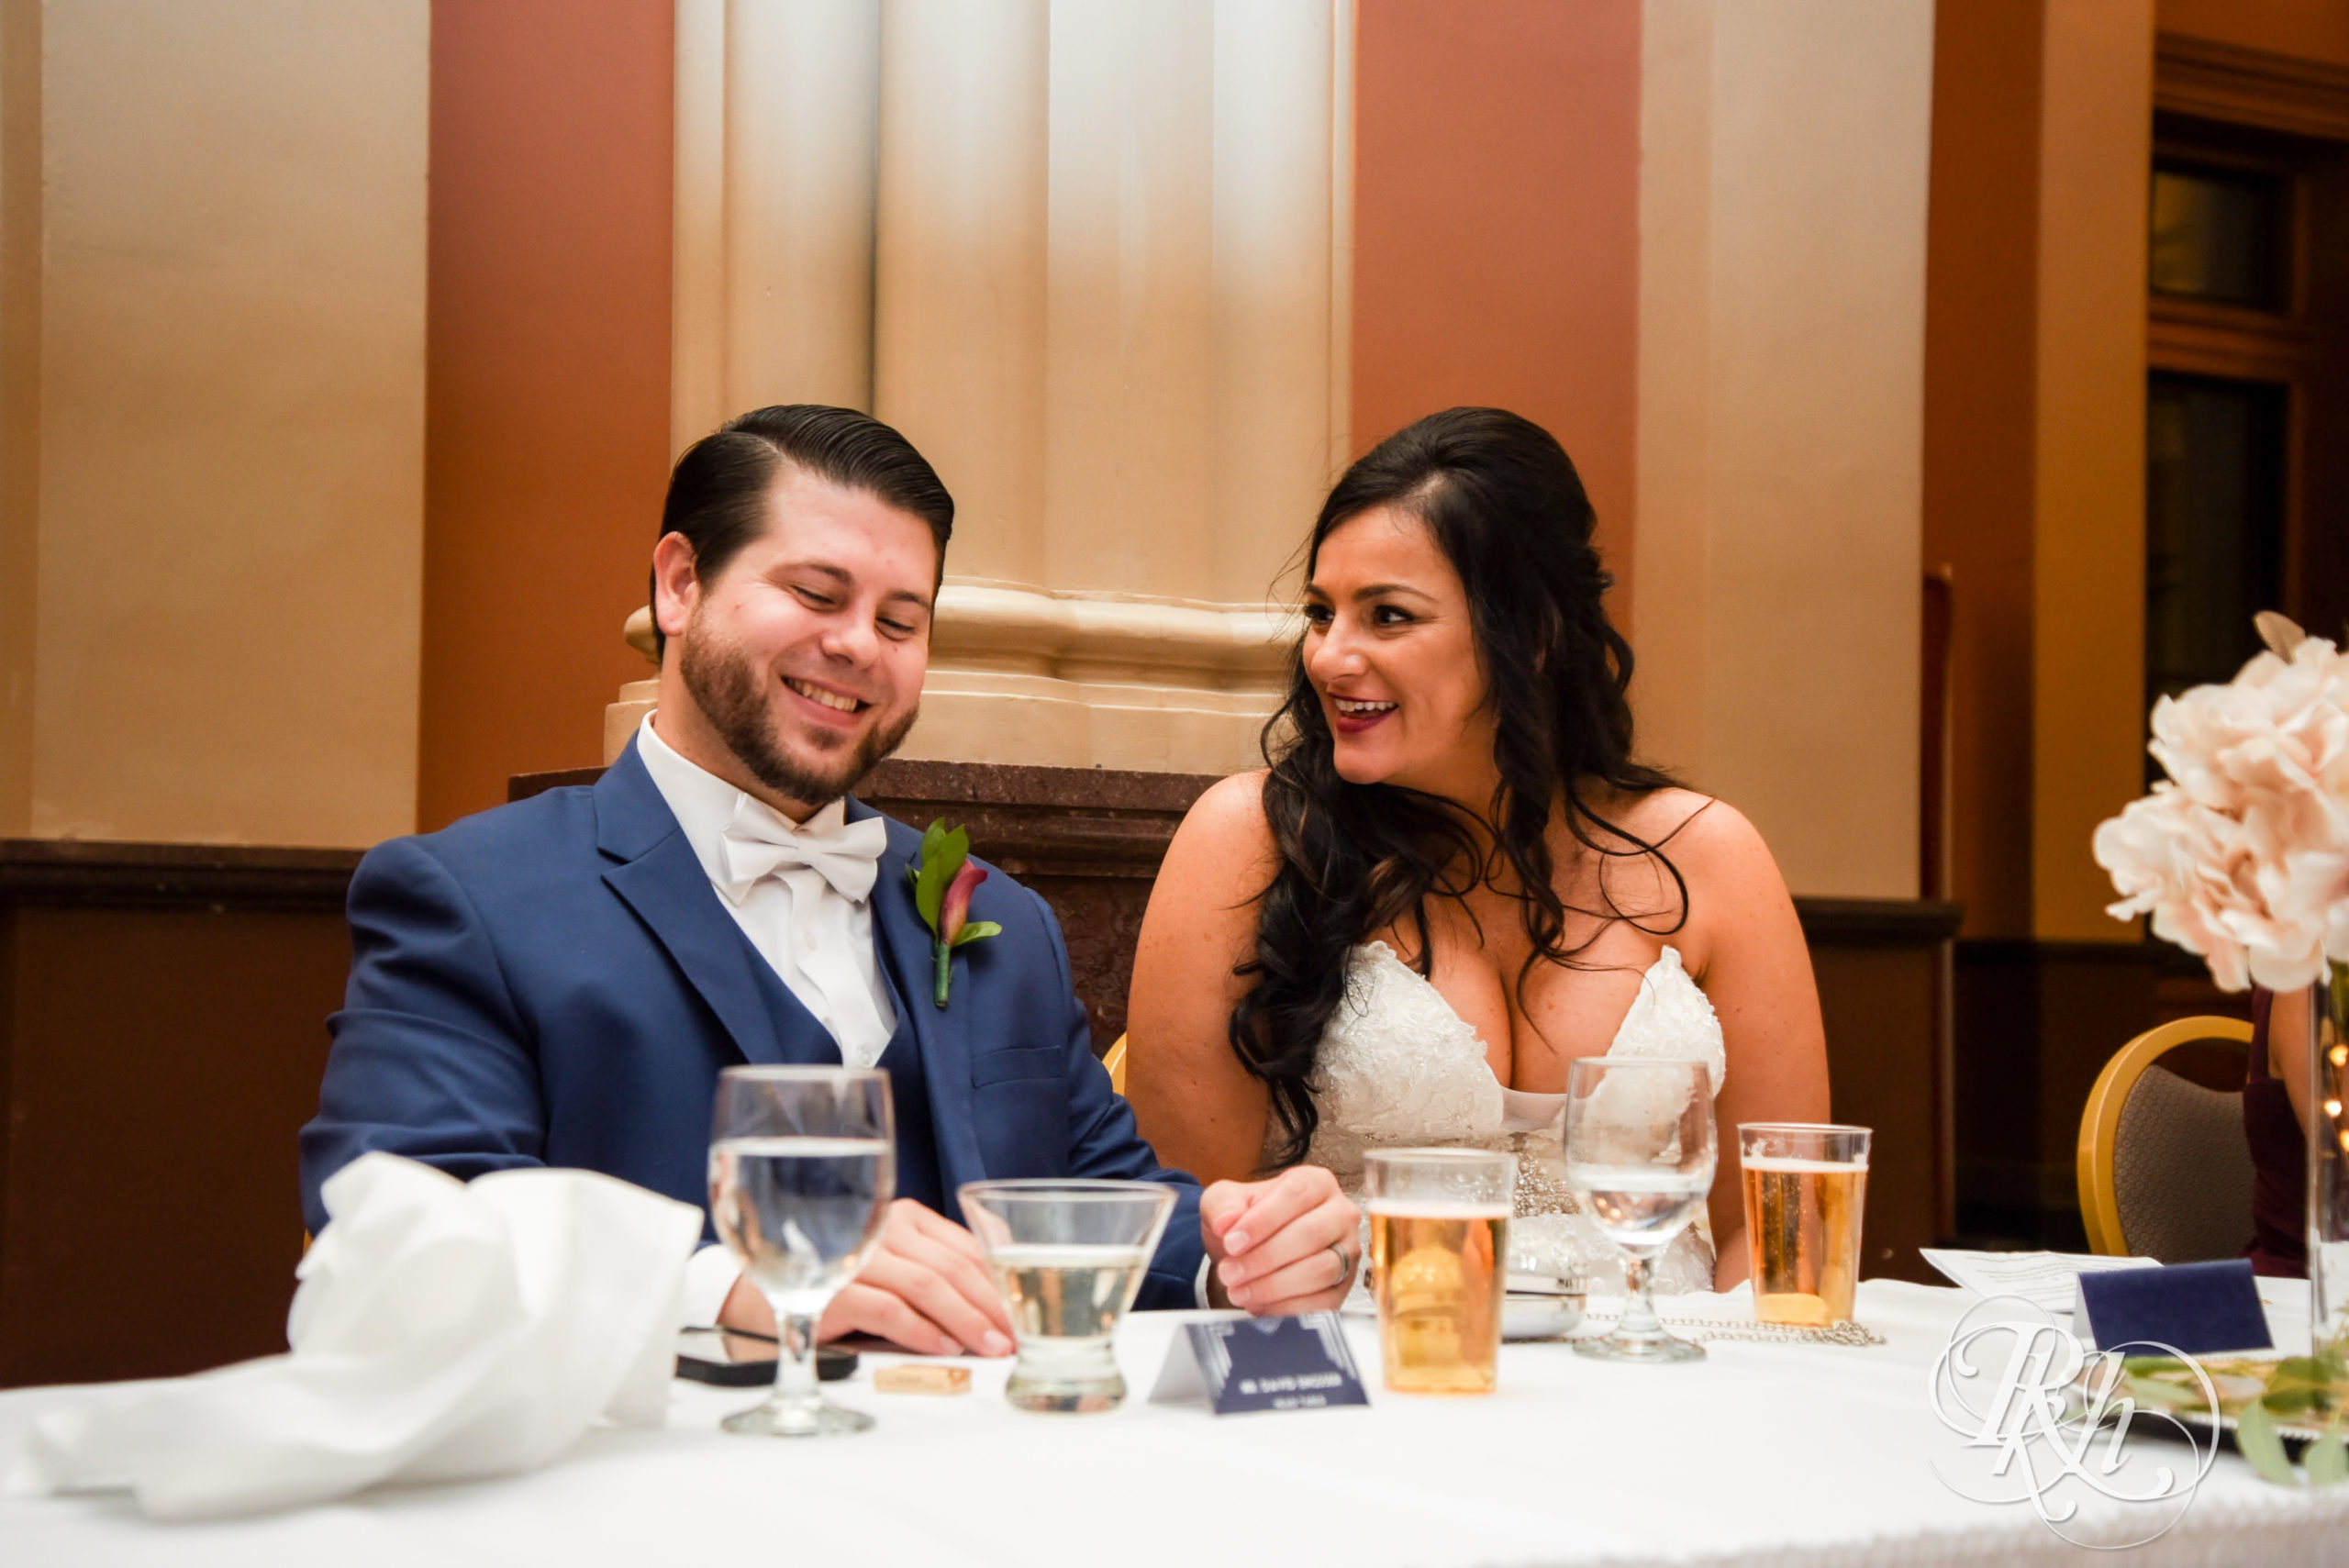 Bride and groom smile during speeches on wedding day at Landmark Center in Saint Paul, Minnesota.